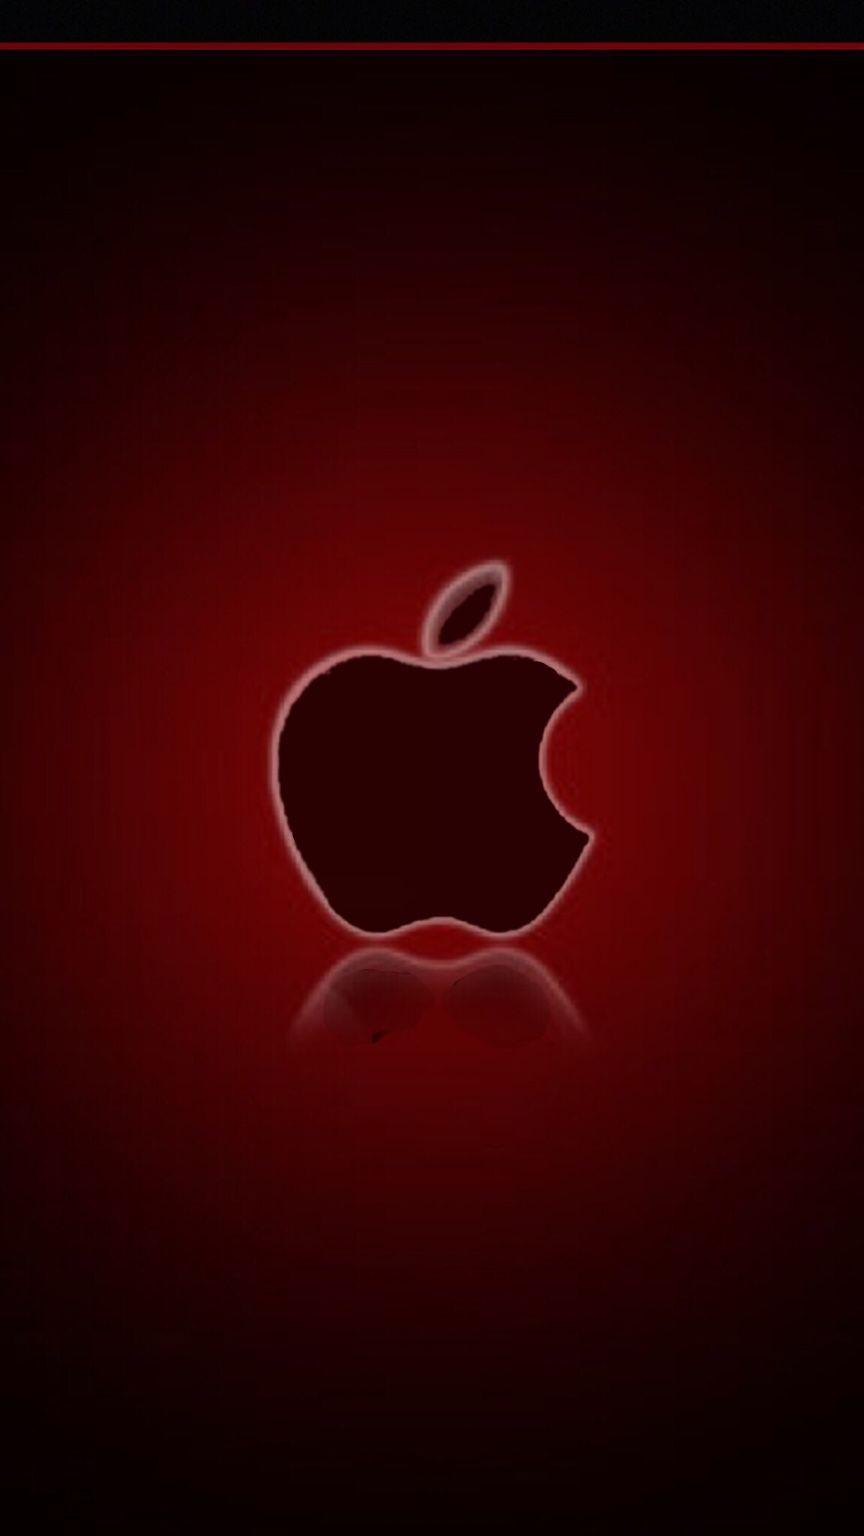 Tiny Apple Logo - Tiny Apple Logo image. Apple Fever!. Apple logo, Red